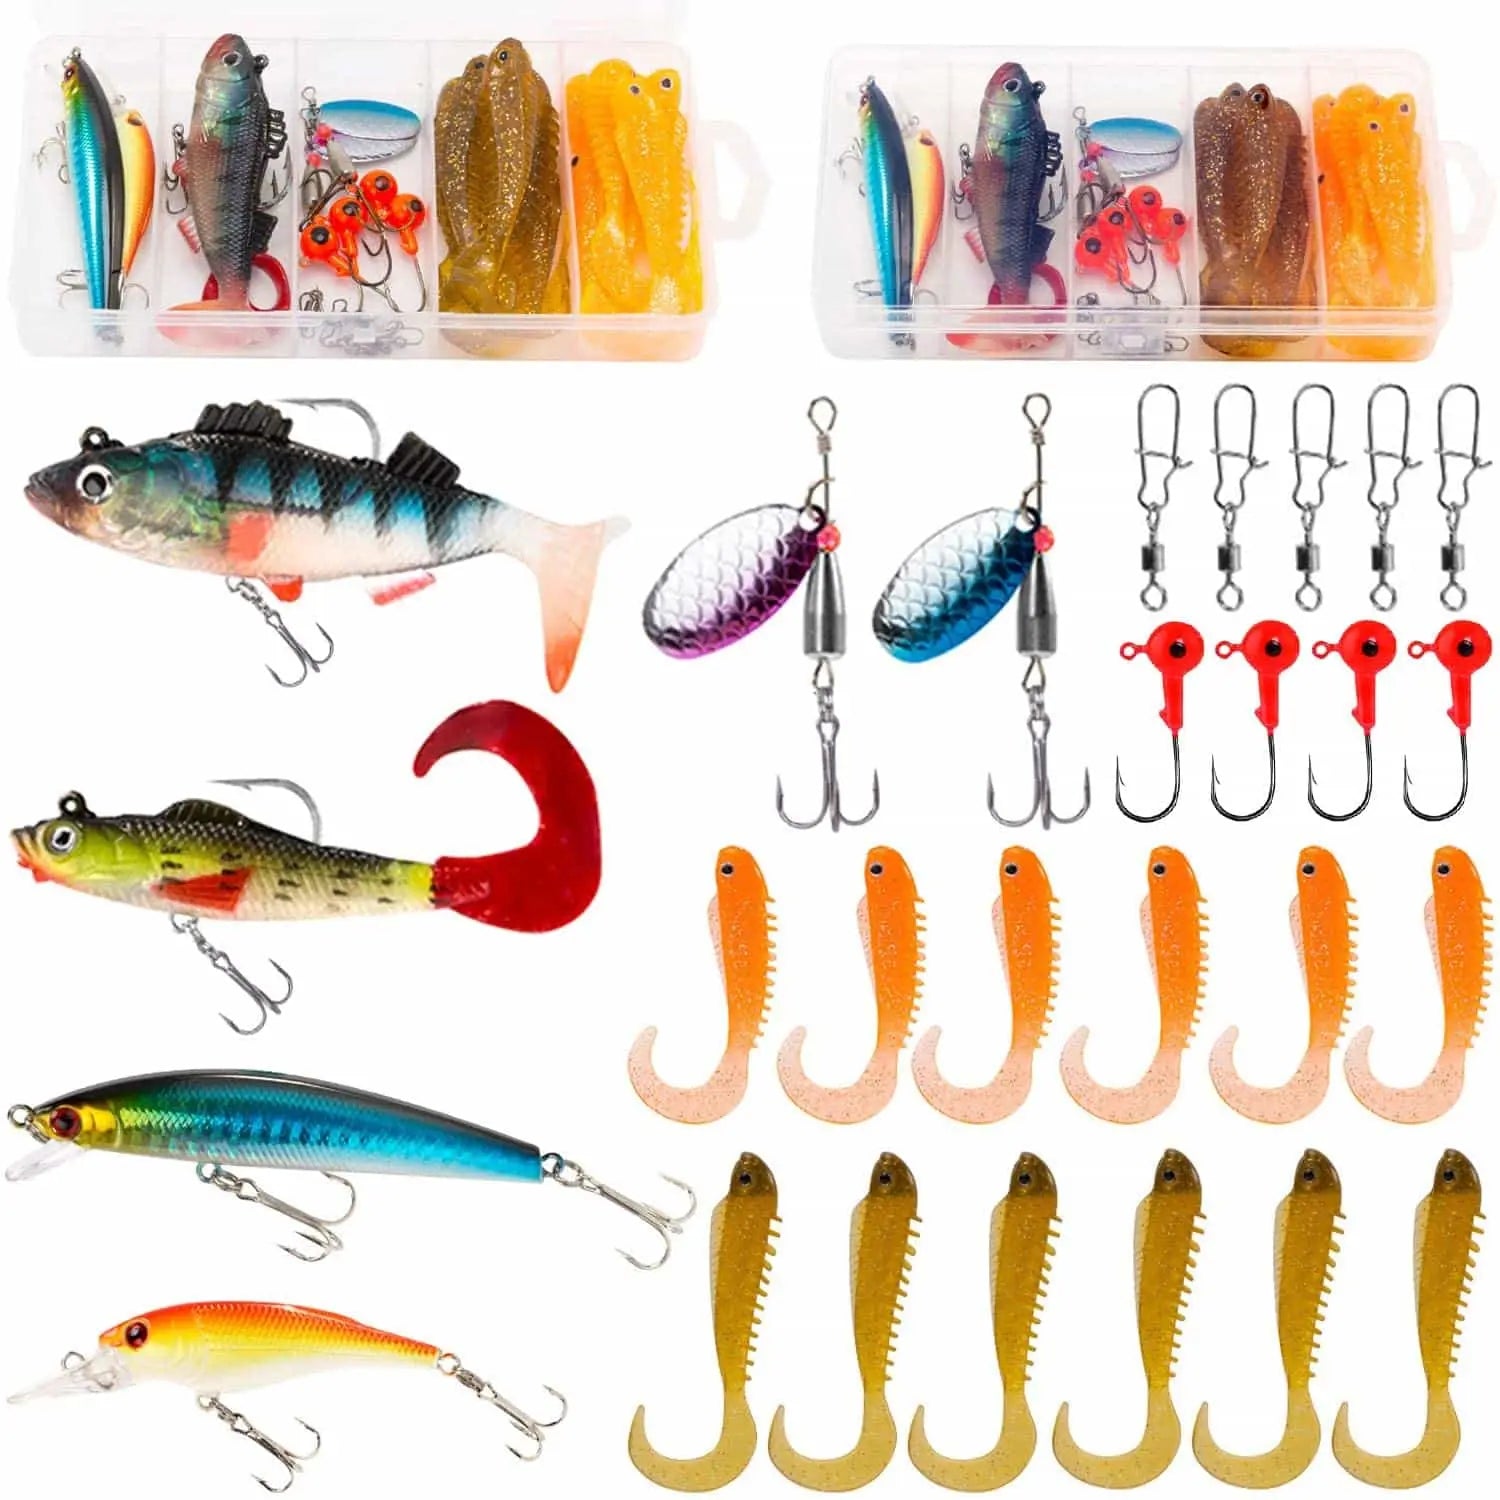 PLUSINNO 27Pcs Fishing Lures Kit